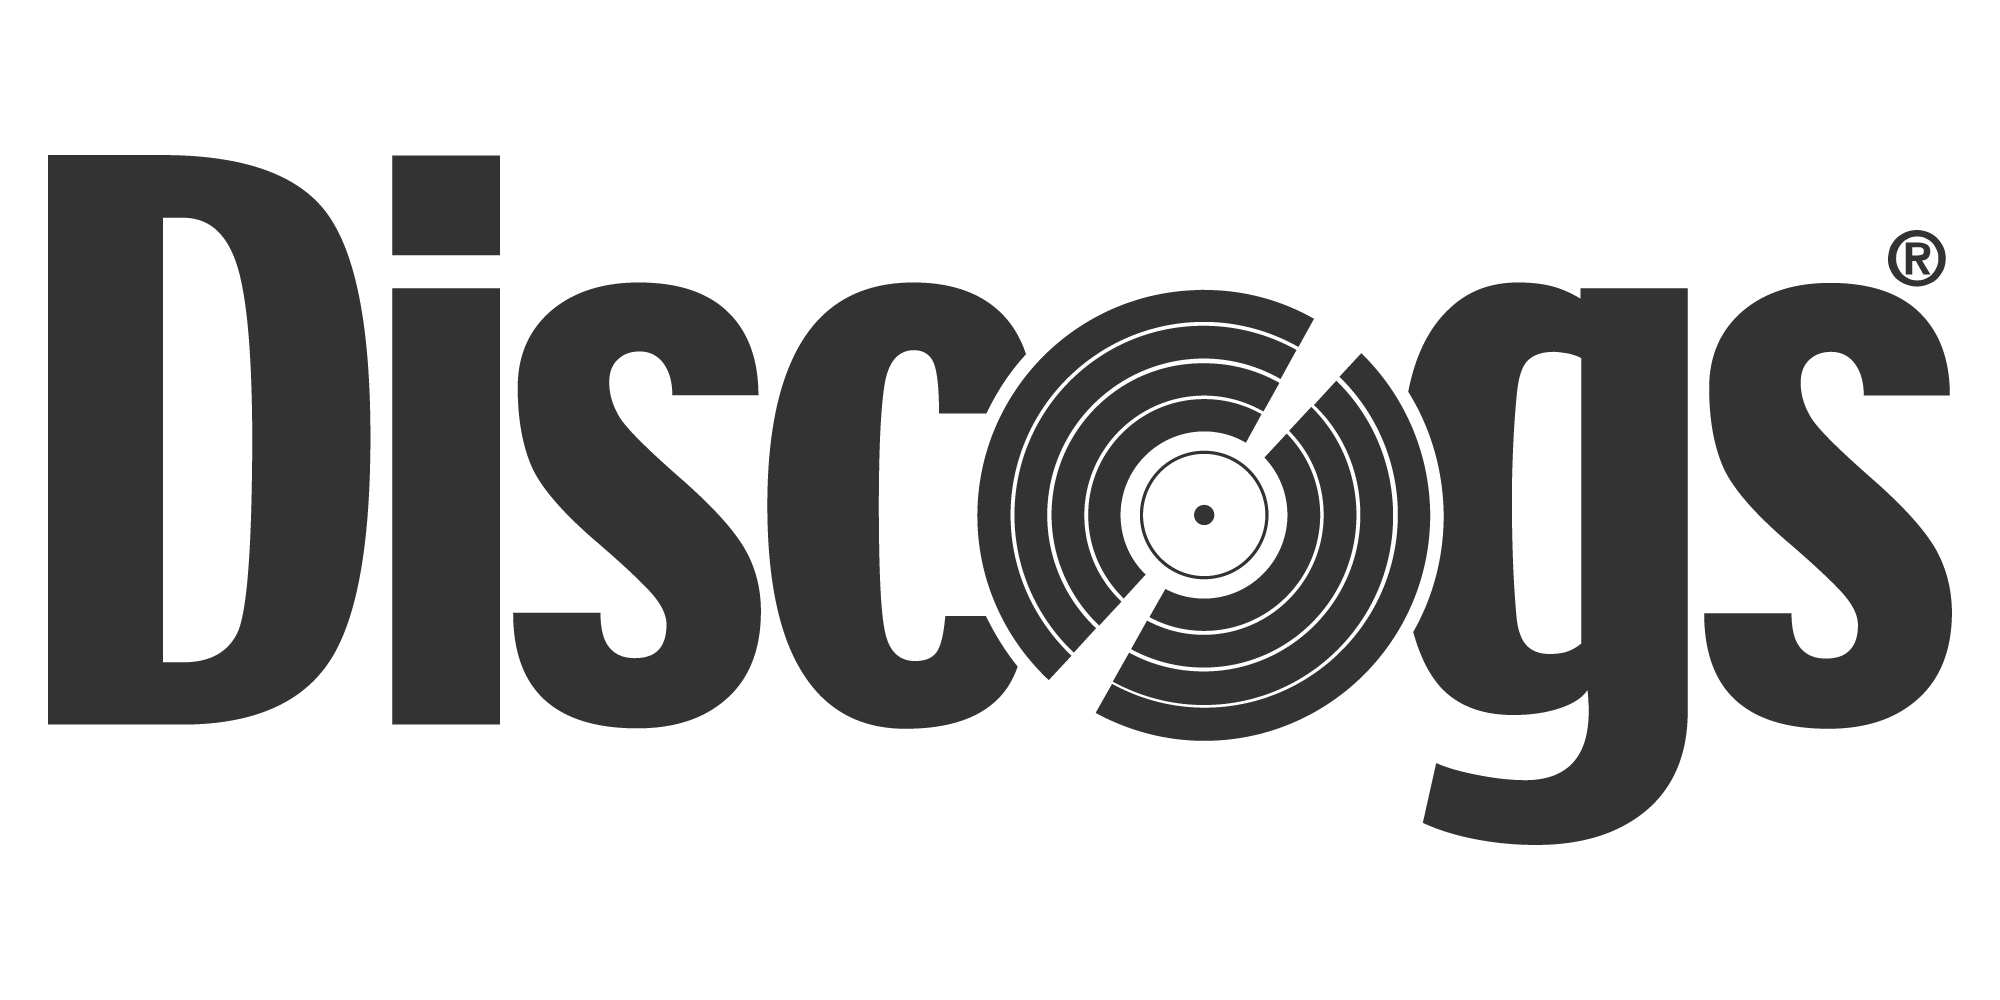 www.discogs.com login